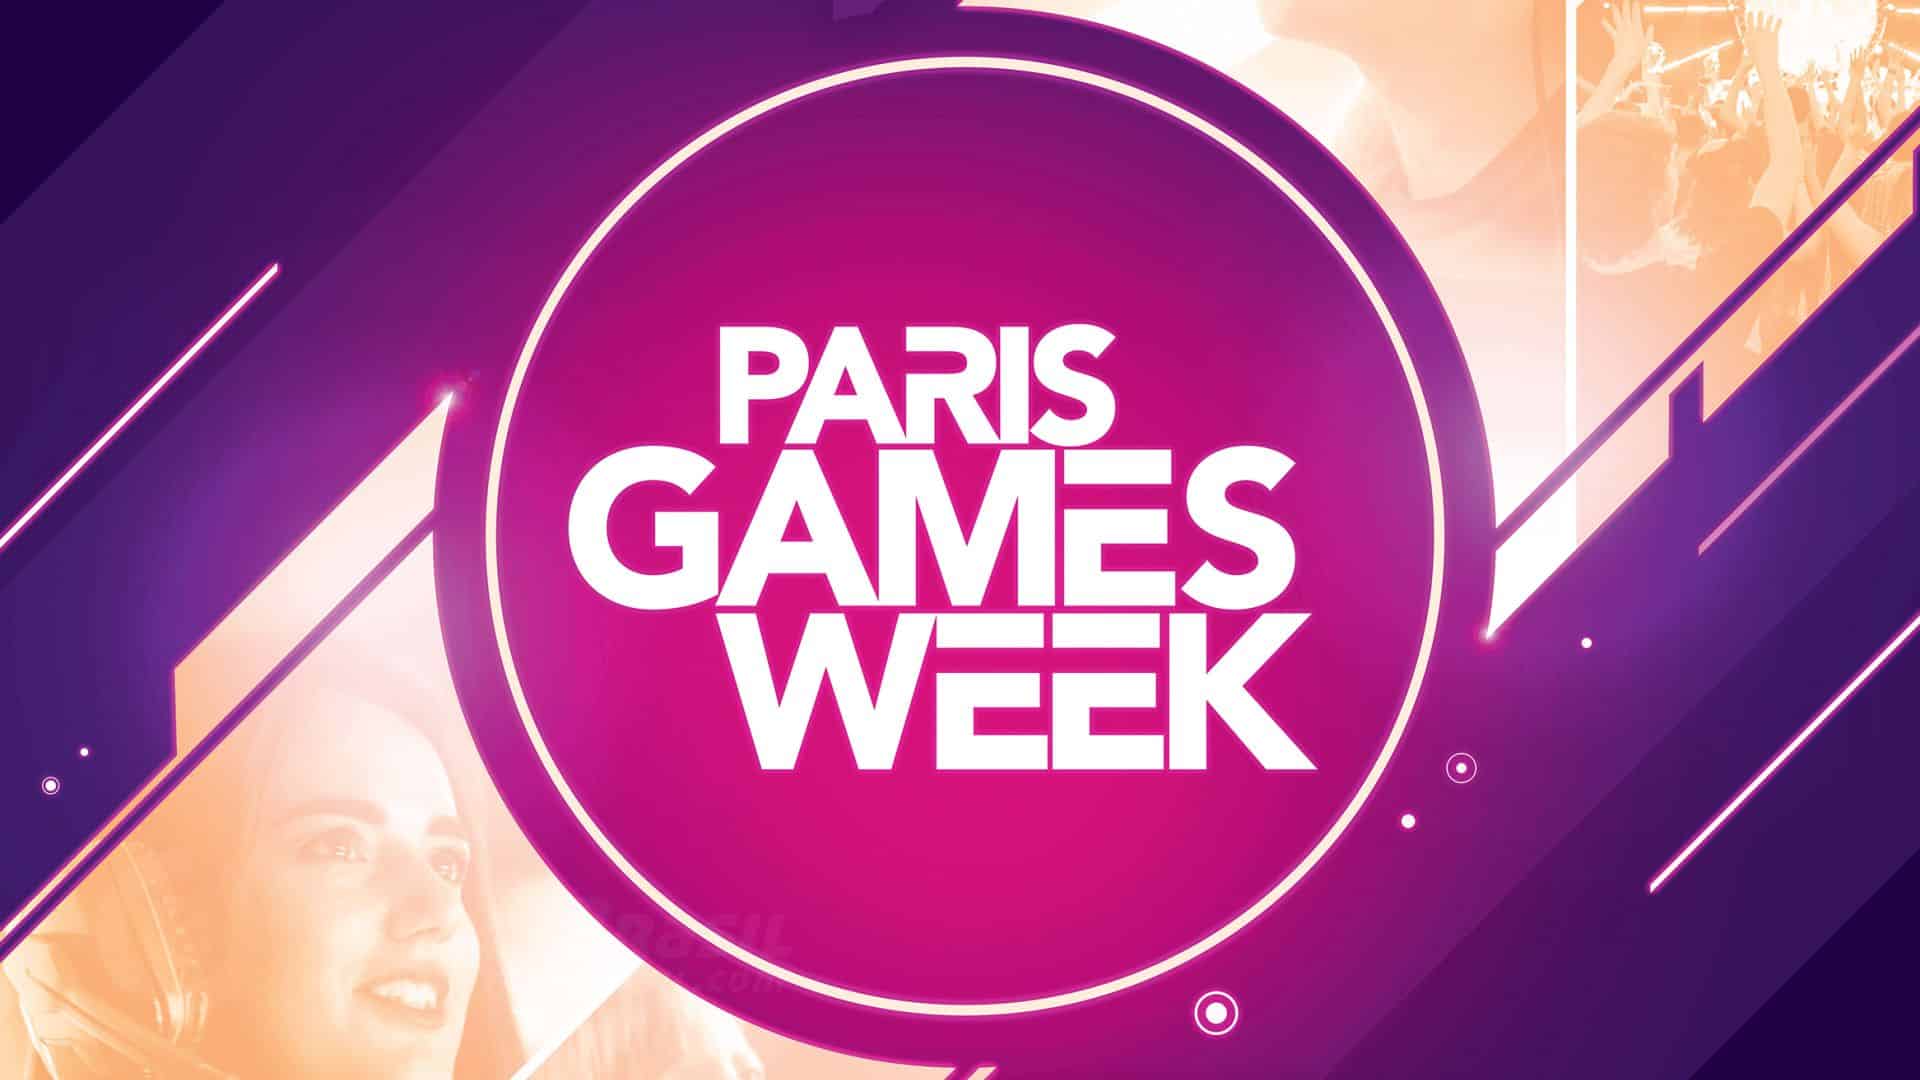 Paris games week 2020 também está cancelada | d240362f paris games week scrn07052020 | married games notícias | paris games week